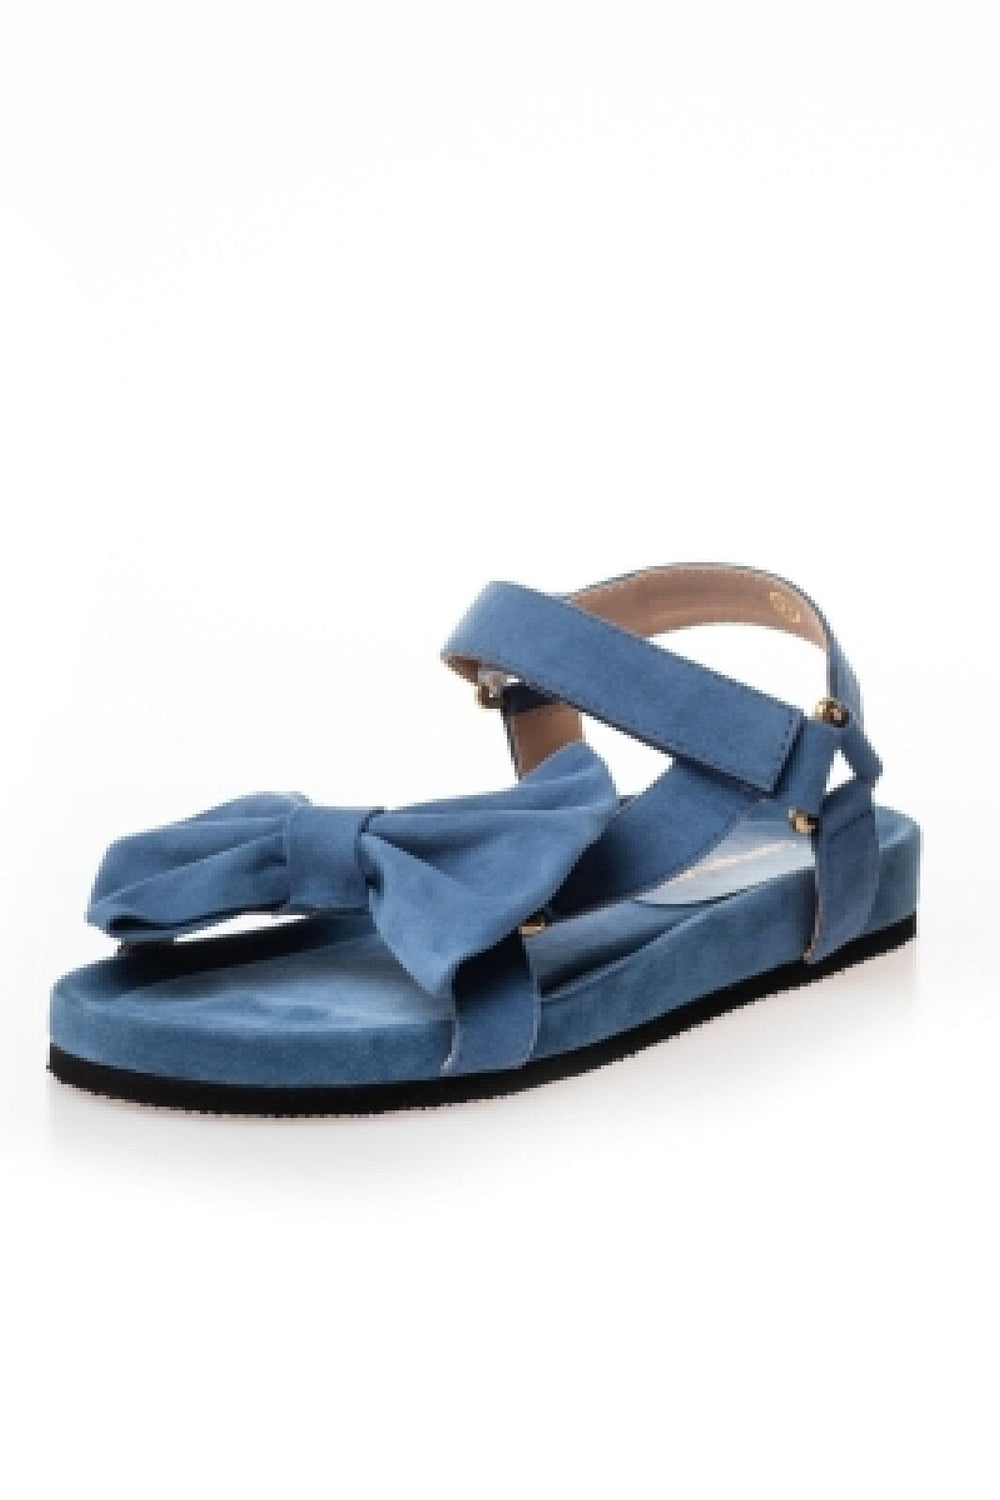 Forudbestilling - Copenhagen Shoes by Josefine Valentin - Sky And Diamonds 23 Suede - 1012 Denim Blue (Marts/april) Sandaler 